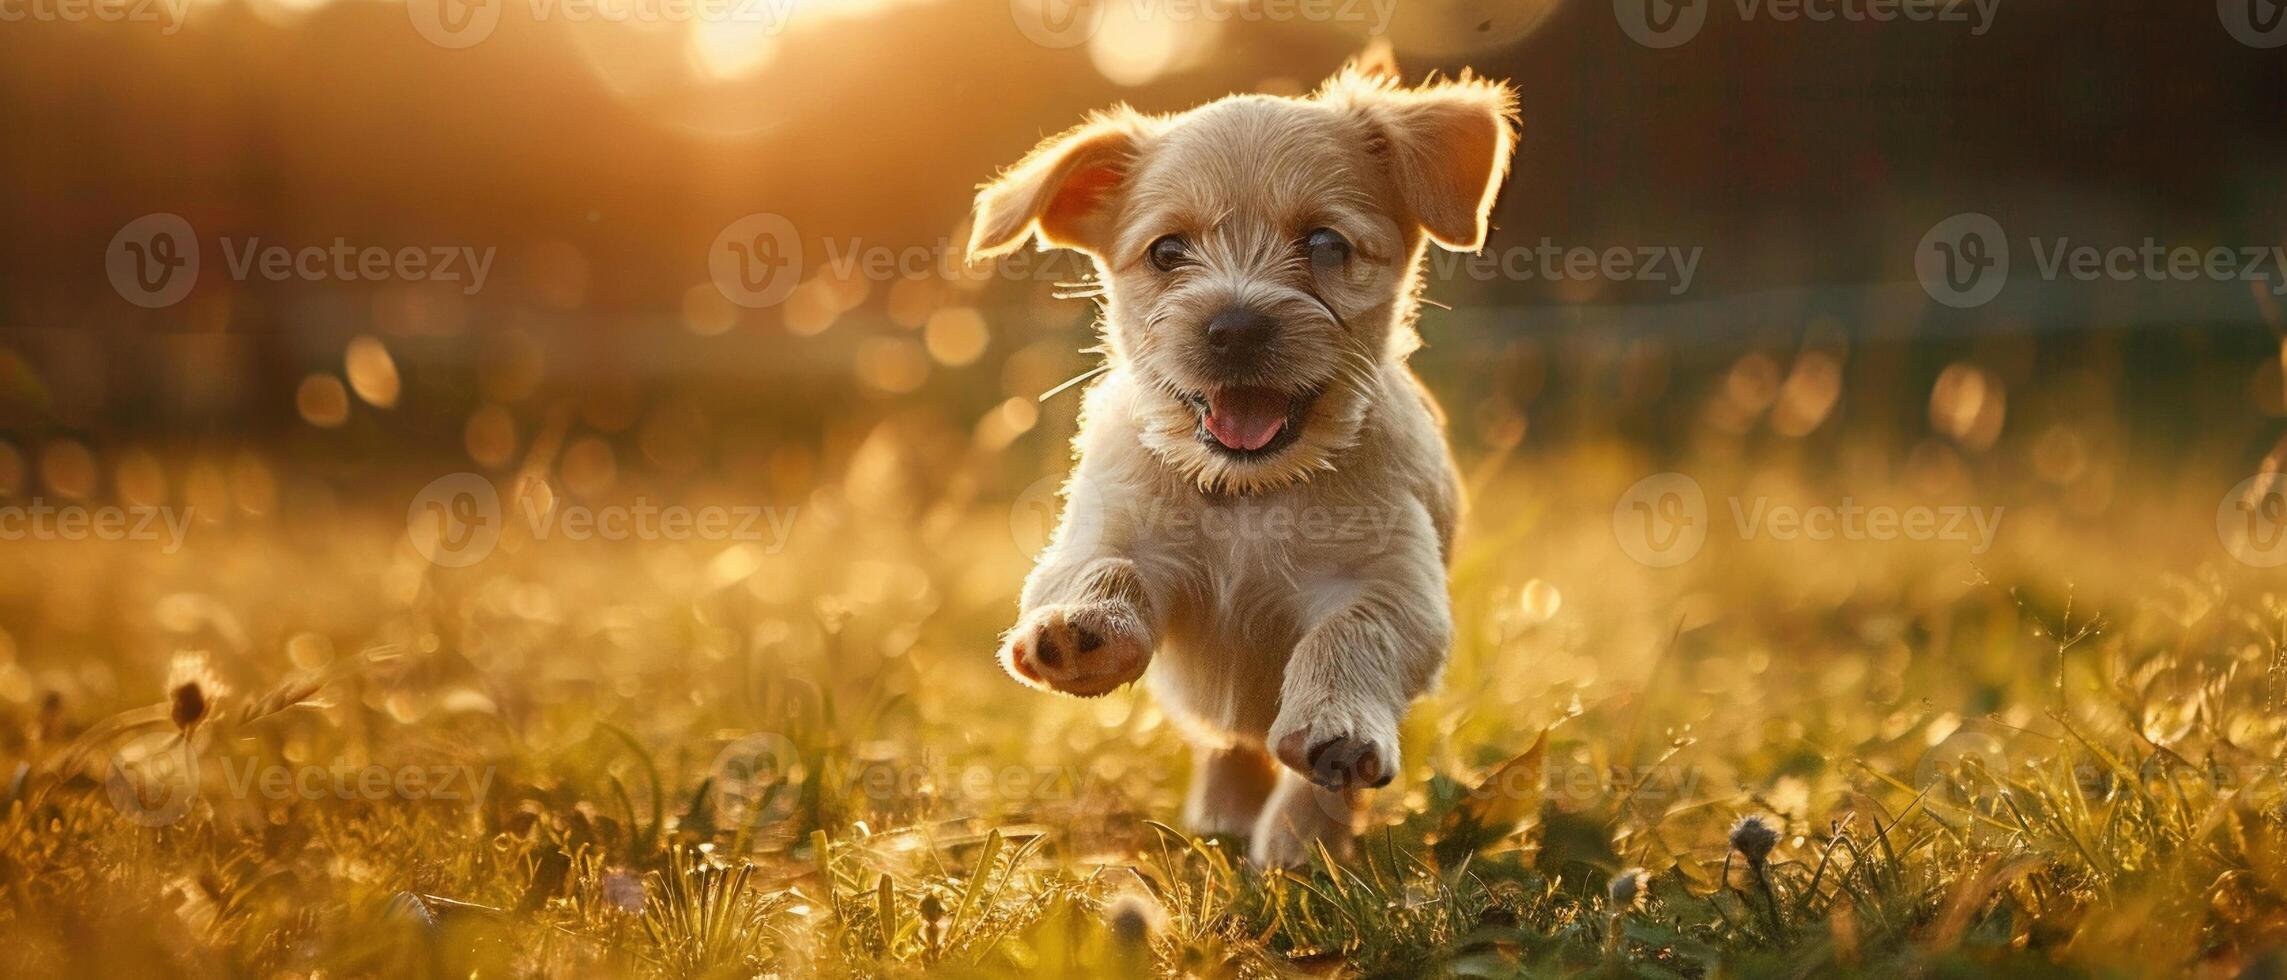 AI generated A playful puppy runs joyfully through a sunlit meadow photo